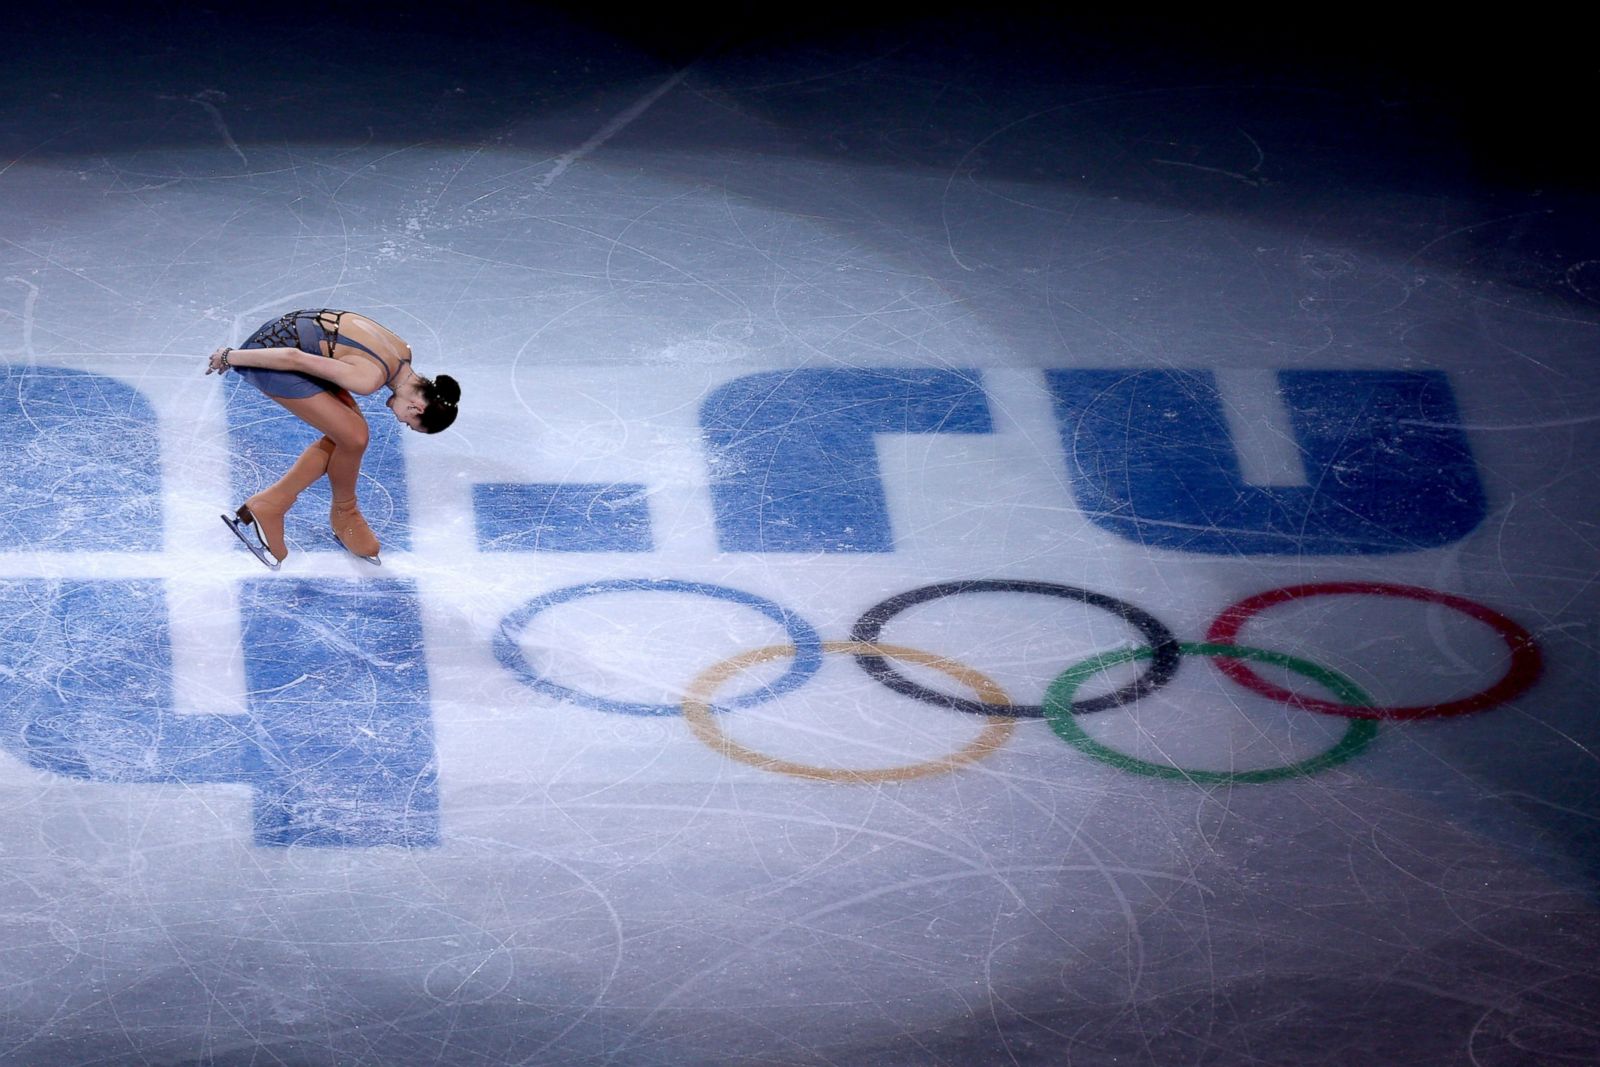 Image - 694427], 2014 Winter Olympics